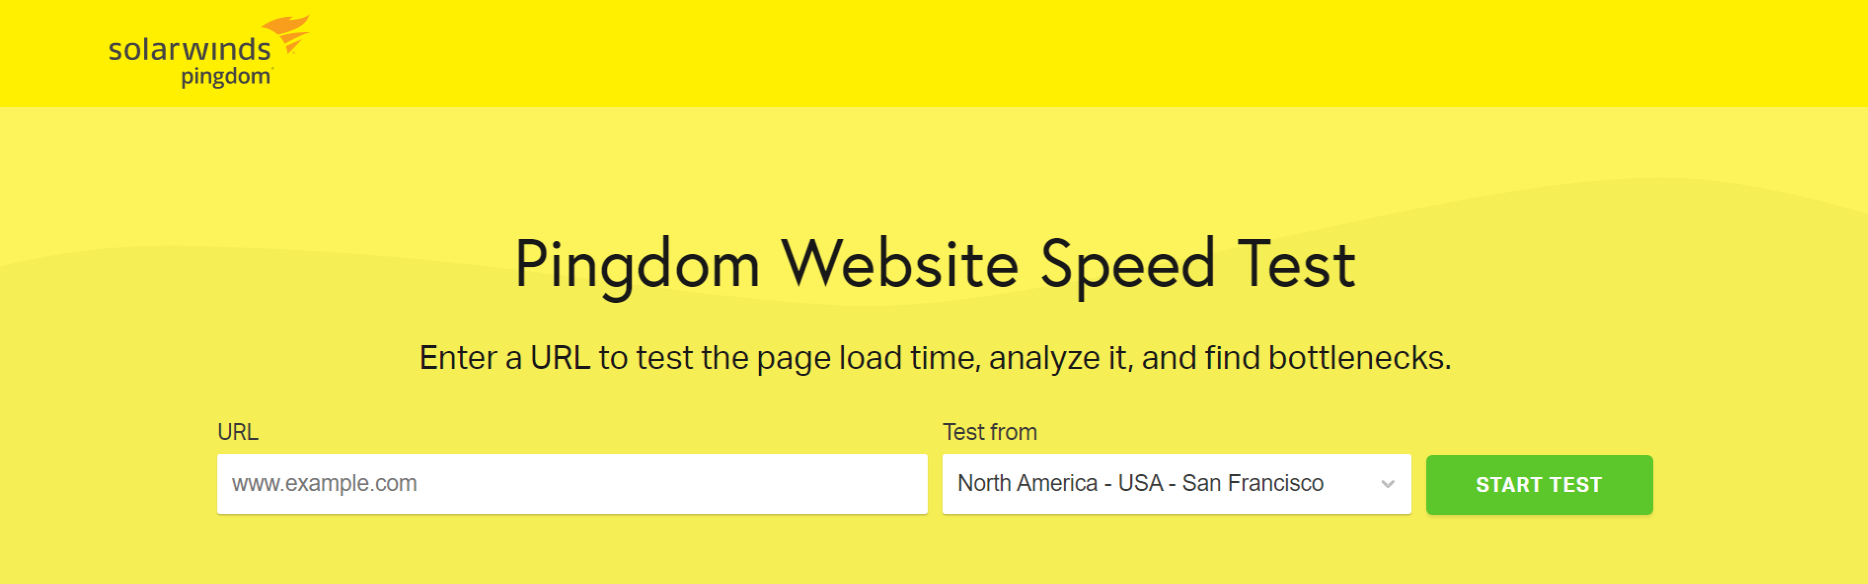 Website-Speed-Test-Pingdom-Tools-Best Website Page Speed Test Tools-Mobile Site-Desktop Site